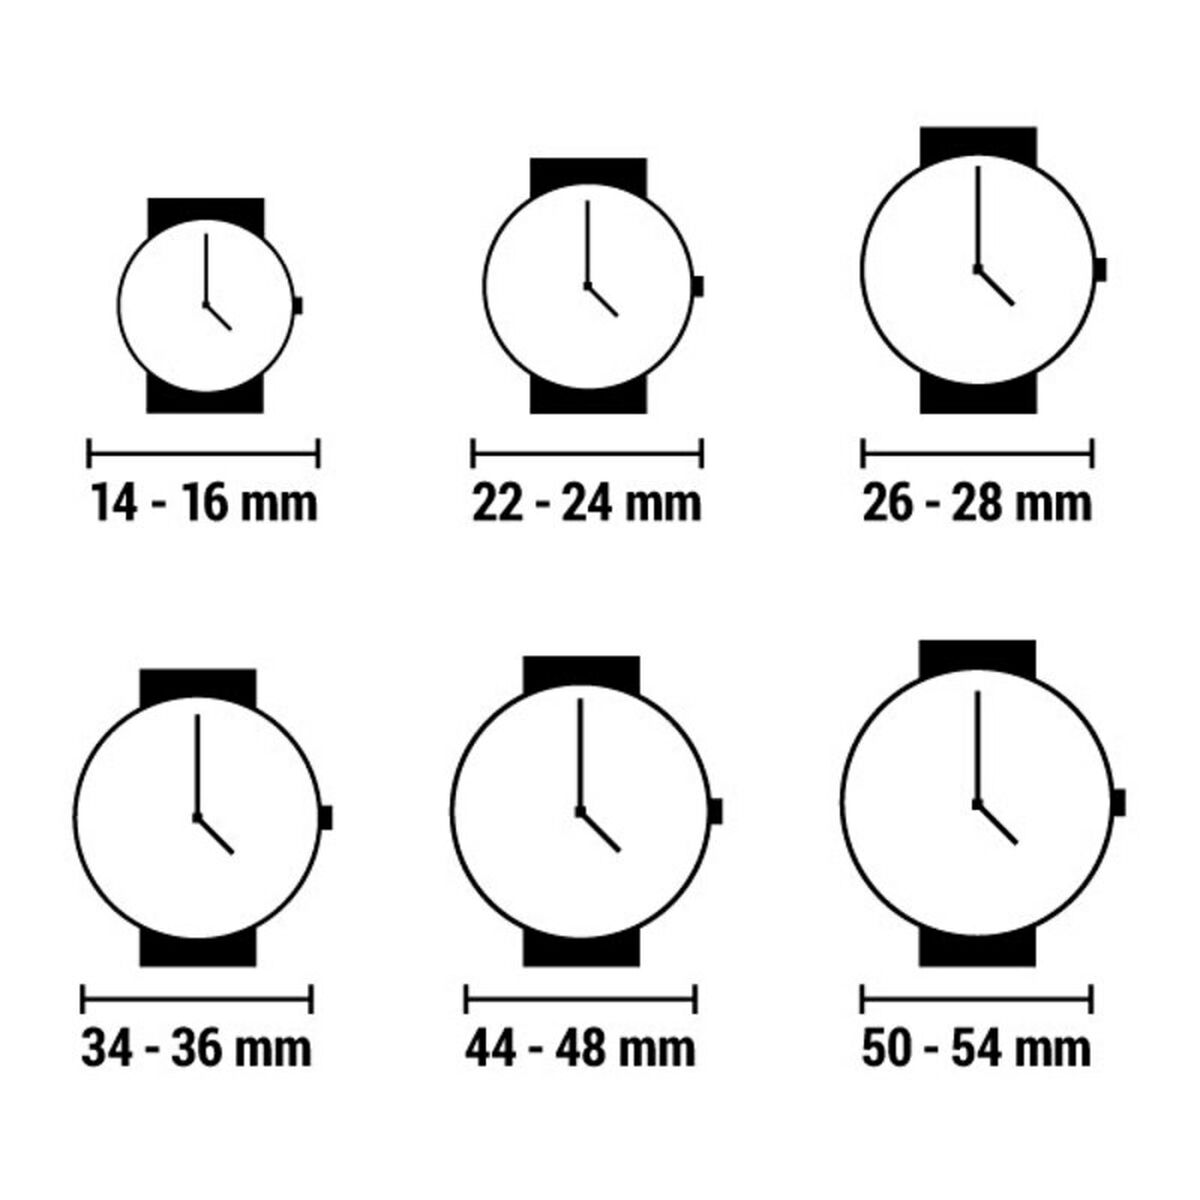 Unisex-Uhr Marc Ecko E06509M1 (Ø 42 mm)